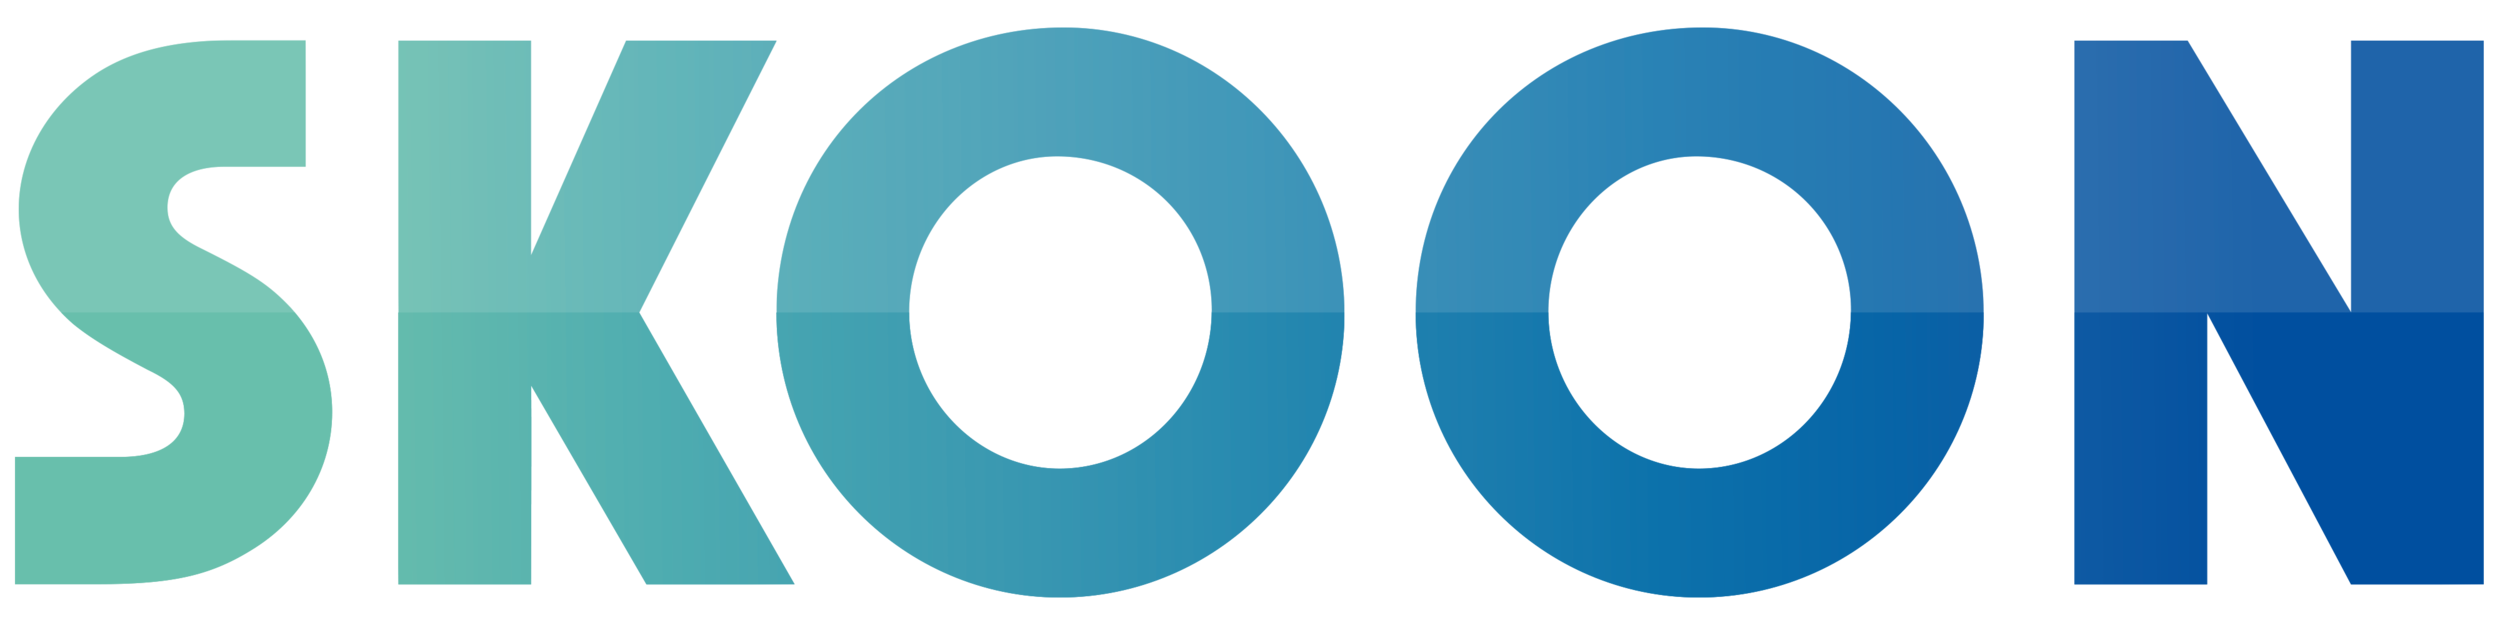 Skoon-logo-2.0-div-formats-gradient-4000px.png